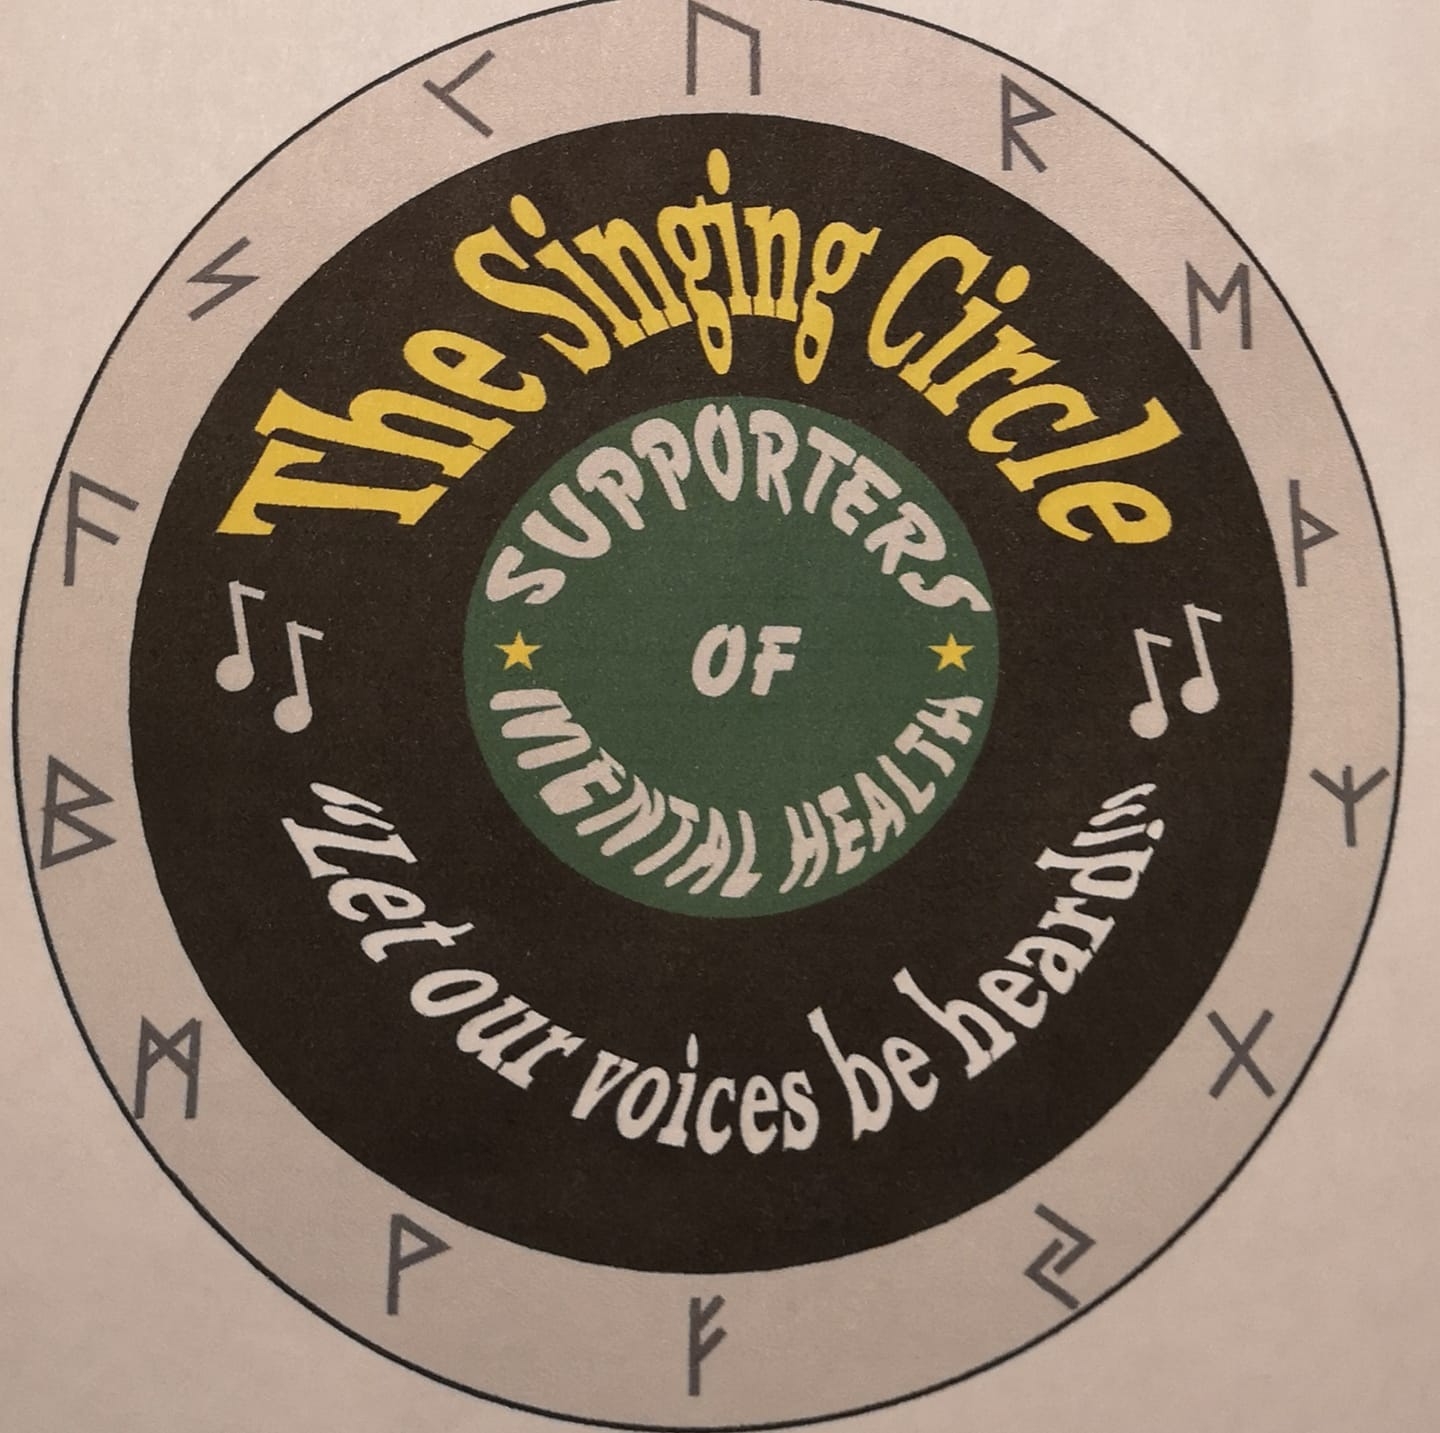 The Singing Circle Essex Club logo